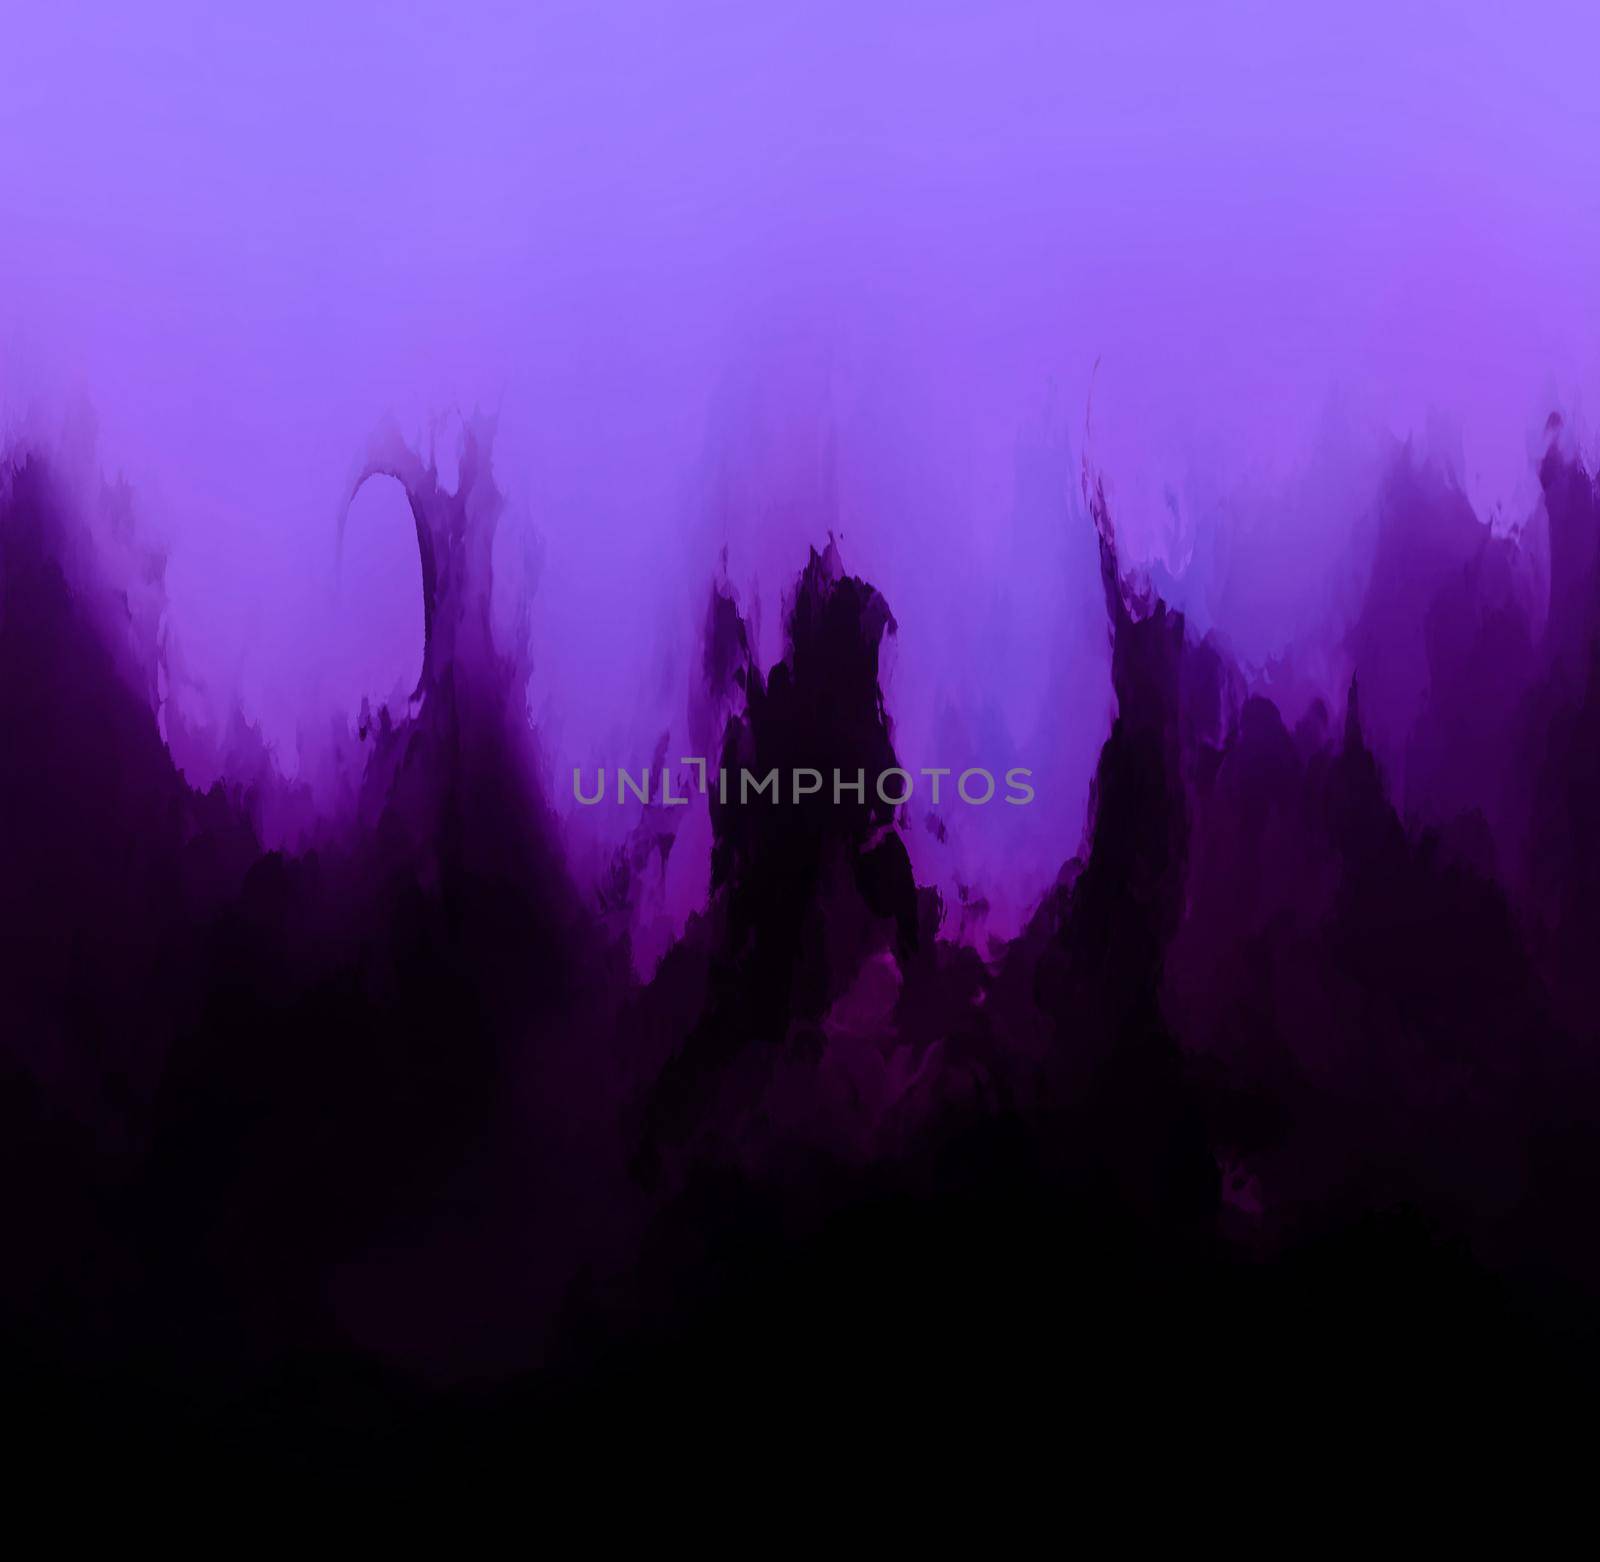 Wallpaper with Dark Smoke on Purple Background